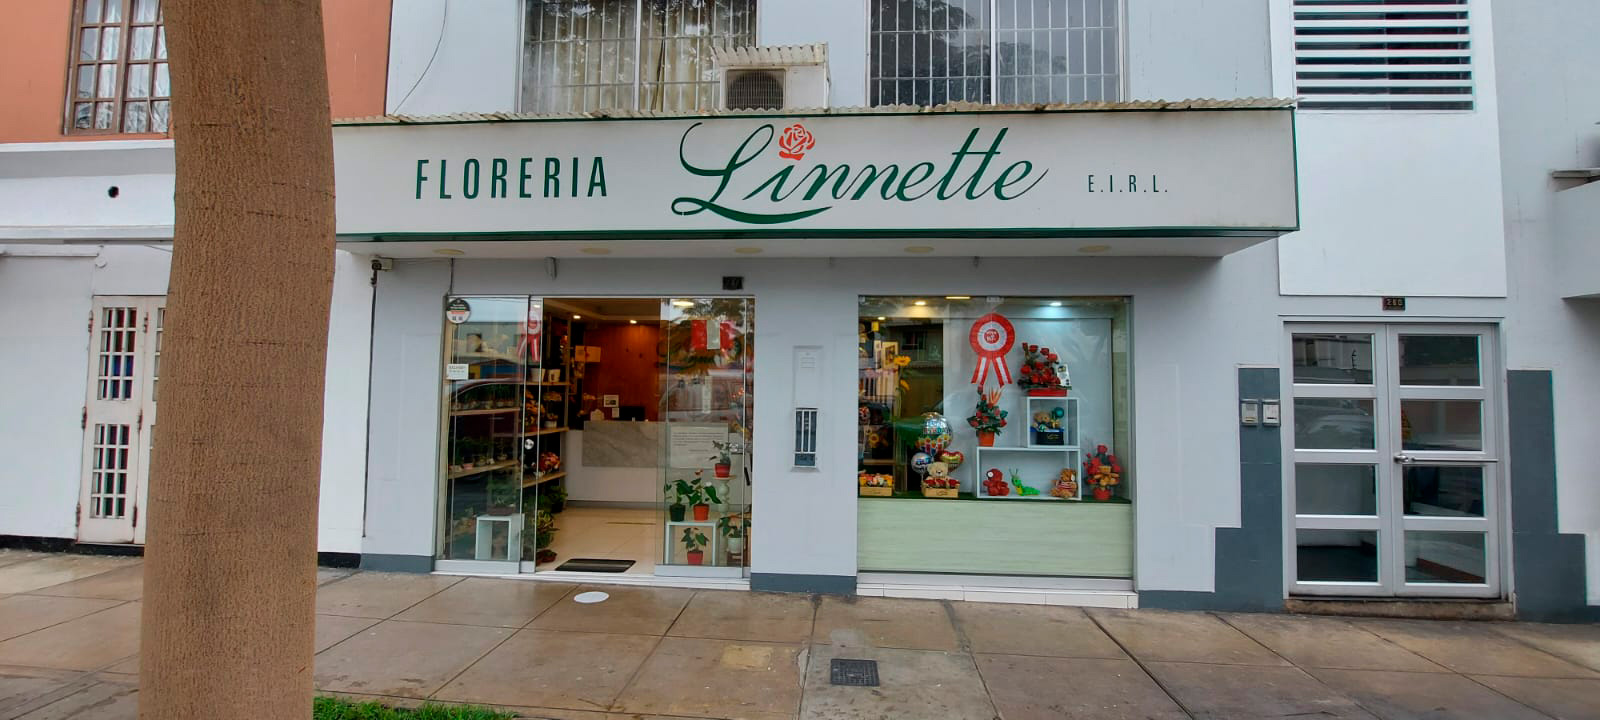 Florería Linnette